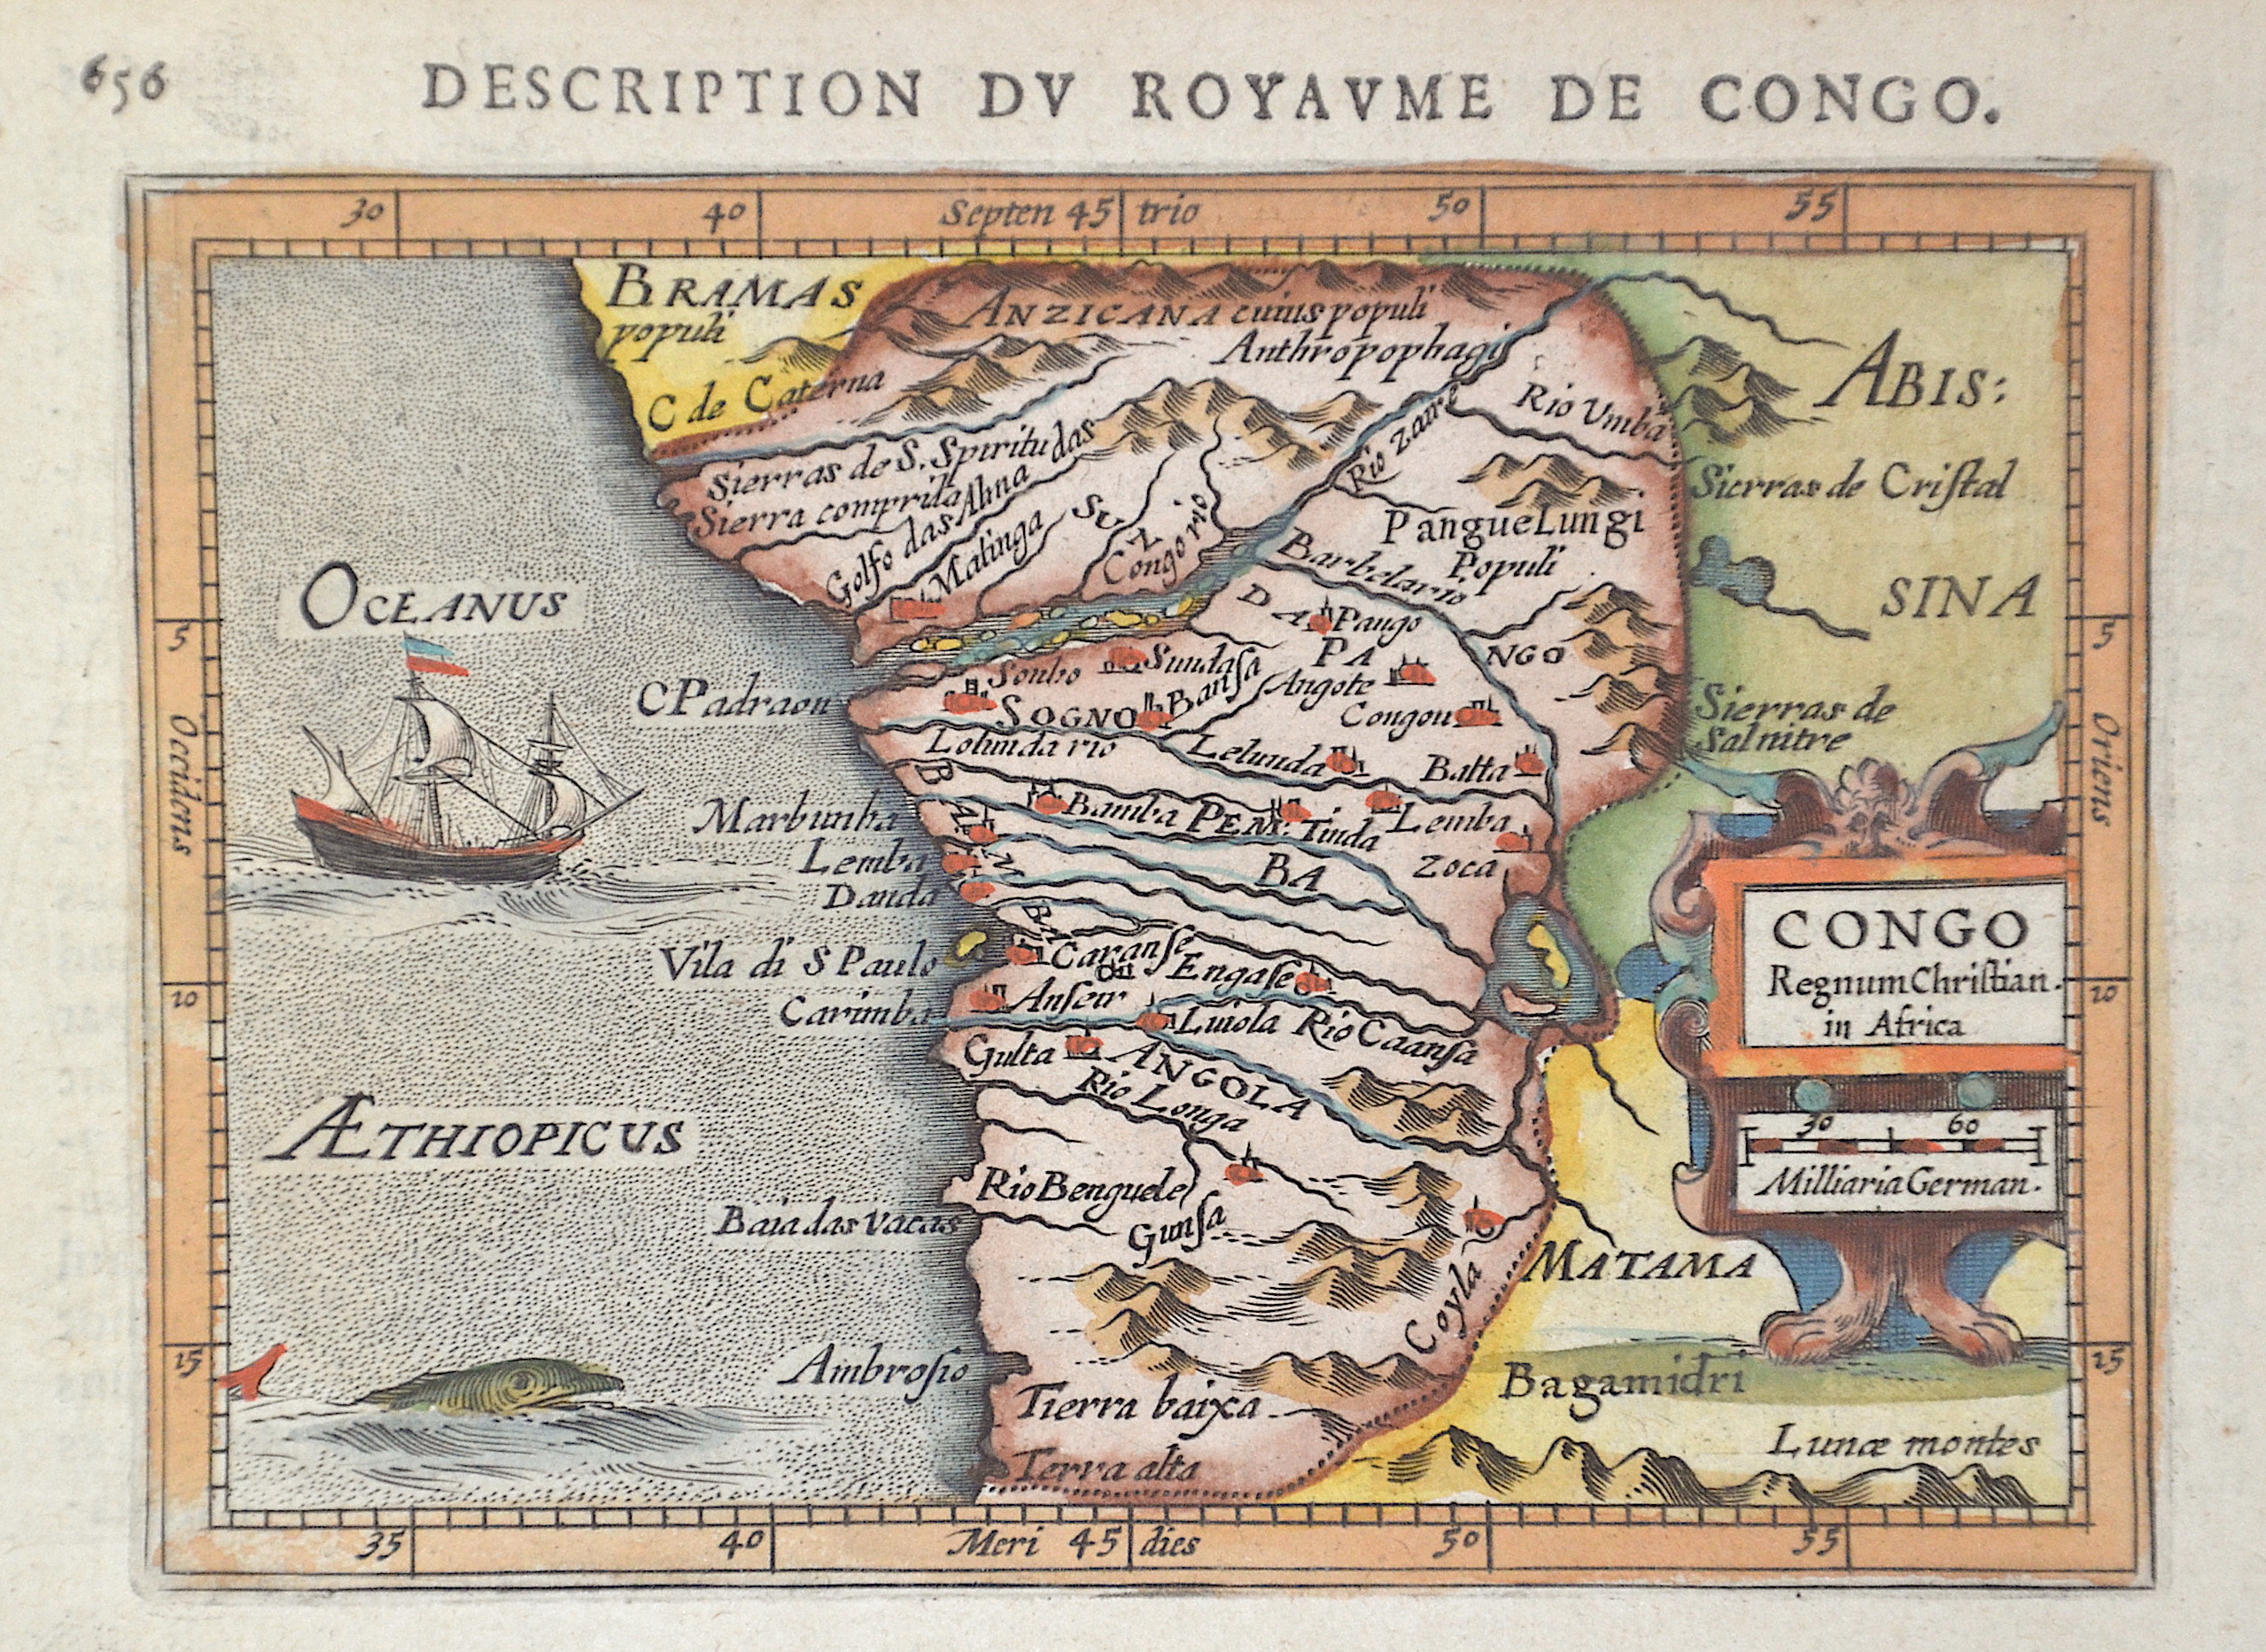 Bertius Petrus Description du royaume de Congo. / Congo Regnum Christian in Africa.